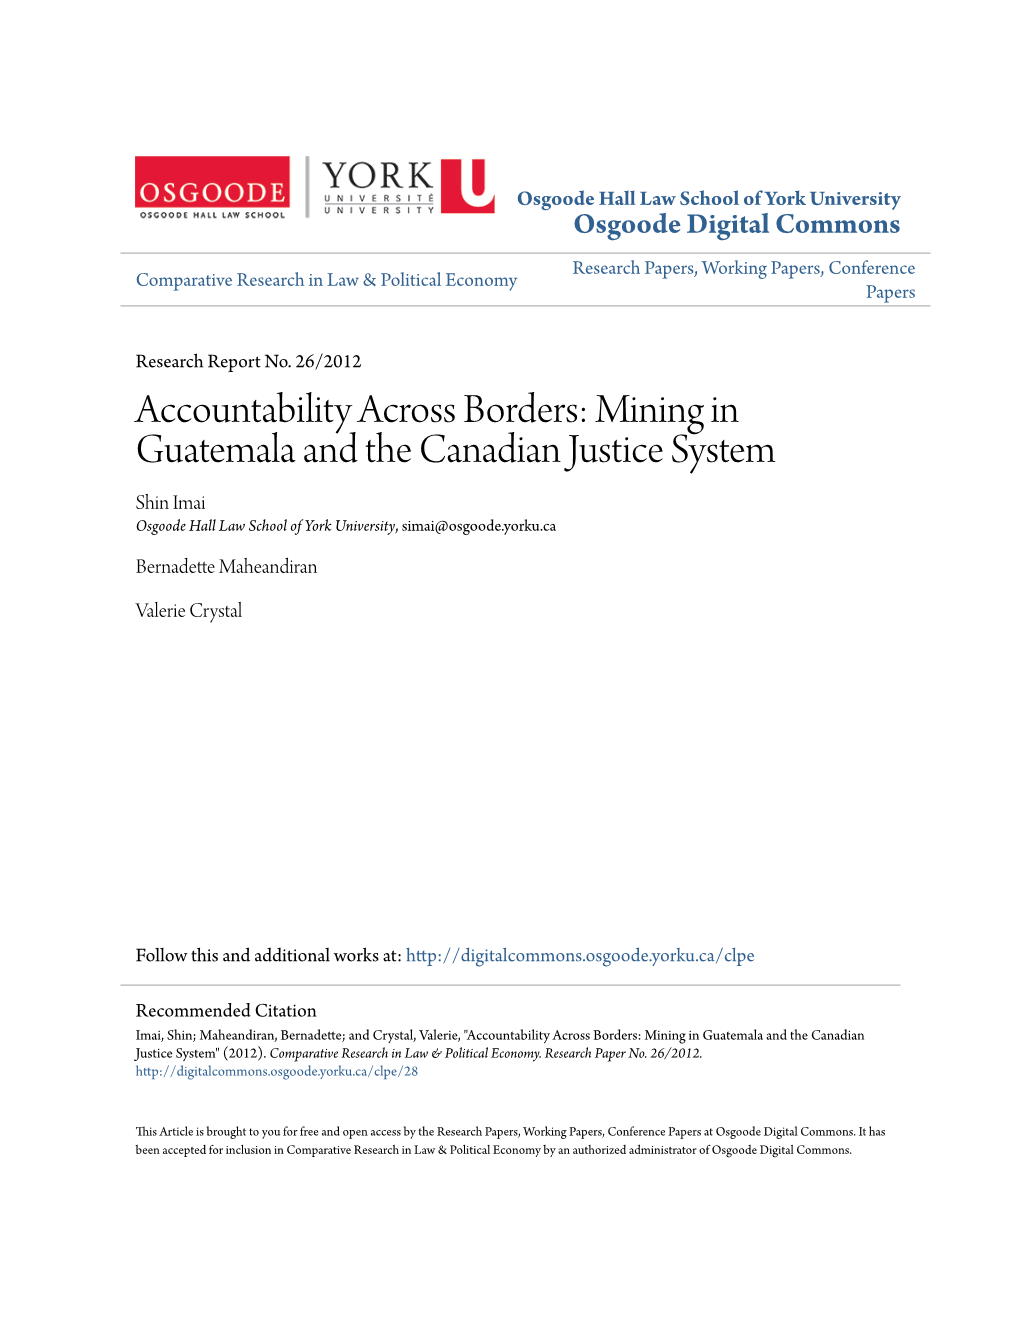 Mining in Guatemala and the Canadian Justice System Shin Imai Osgoode Hall Law School of York University, Simai@Osgoode.Yorku.Ca